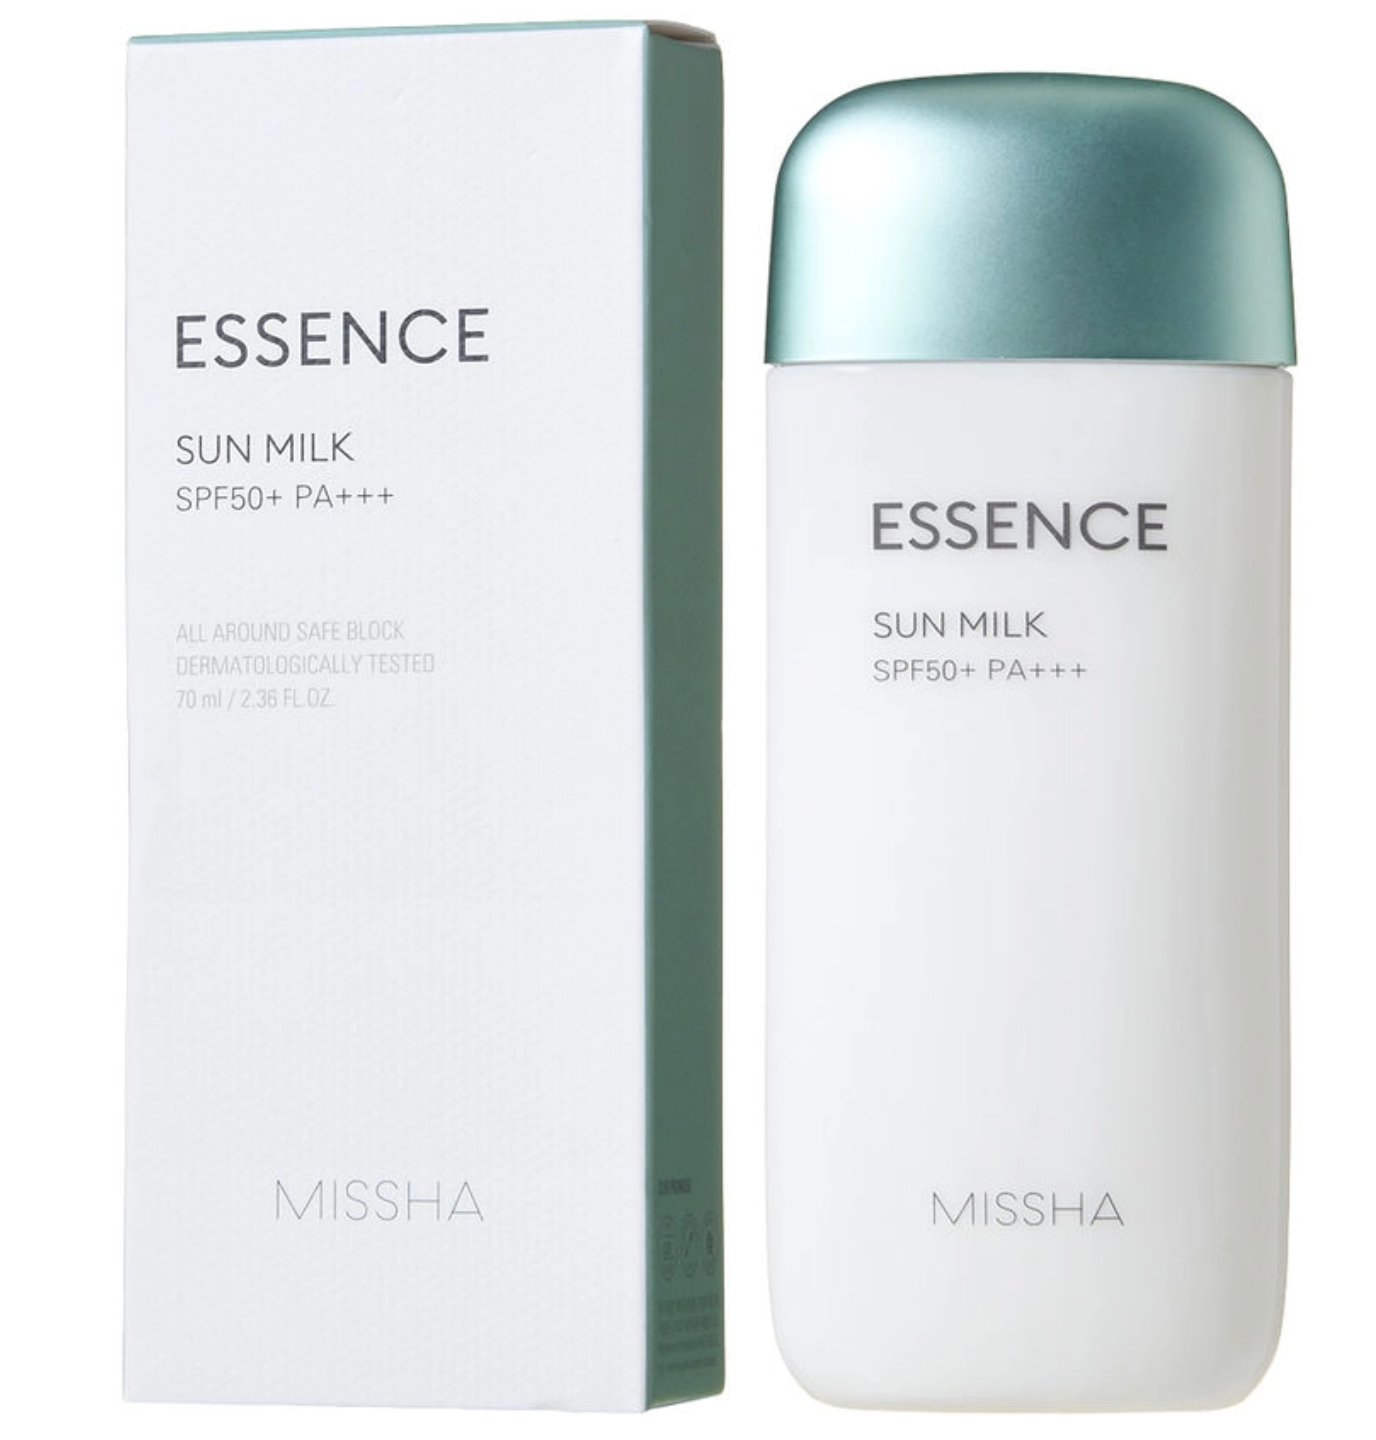 MISSHA - All-Around Safe Block Essence Sun Milk SPF50+ PA+++ 70ml - The Face Method